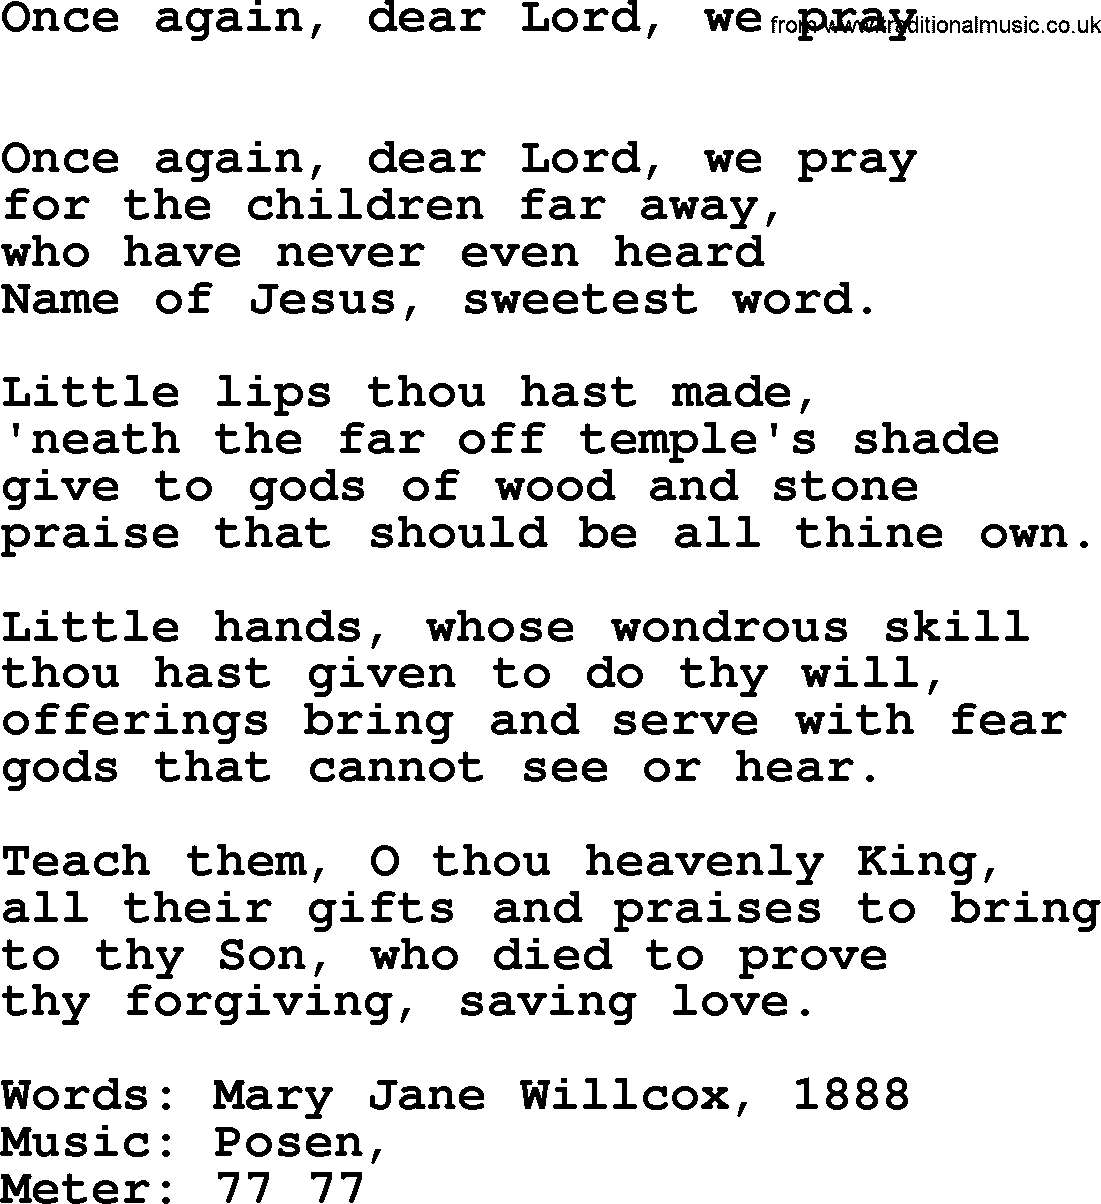 Book of Common Praise Hymn: Once Again, Dear Lord, We Pray.txt lyrics with midi music